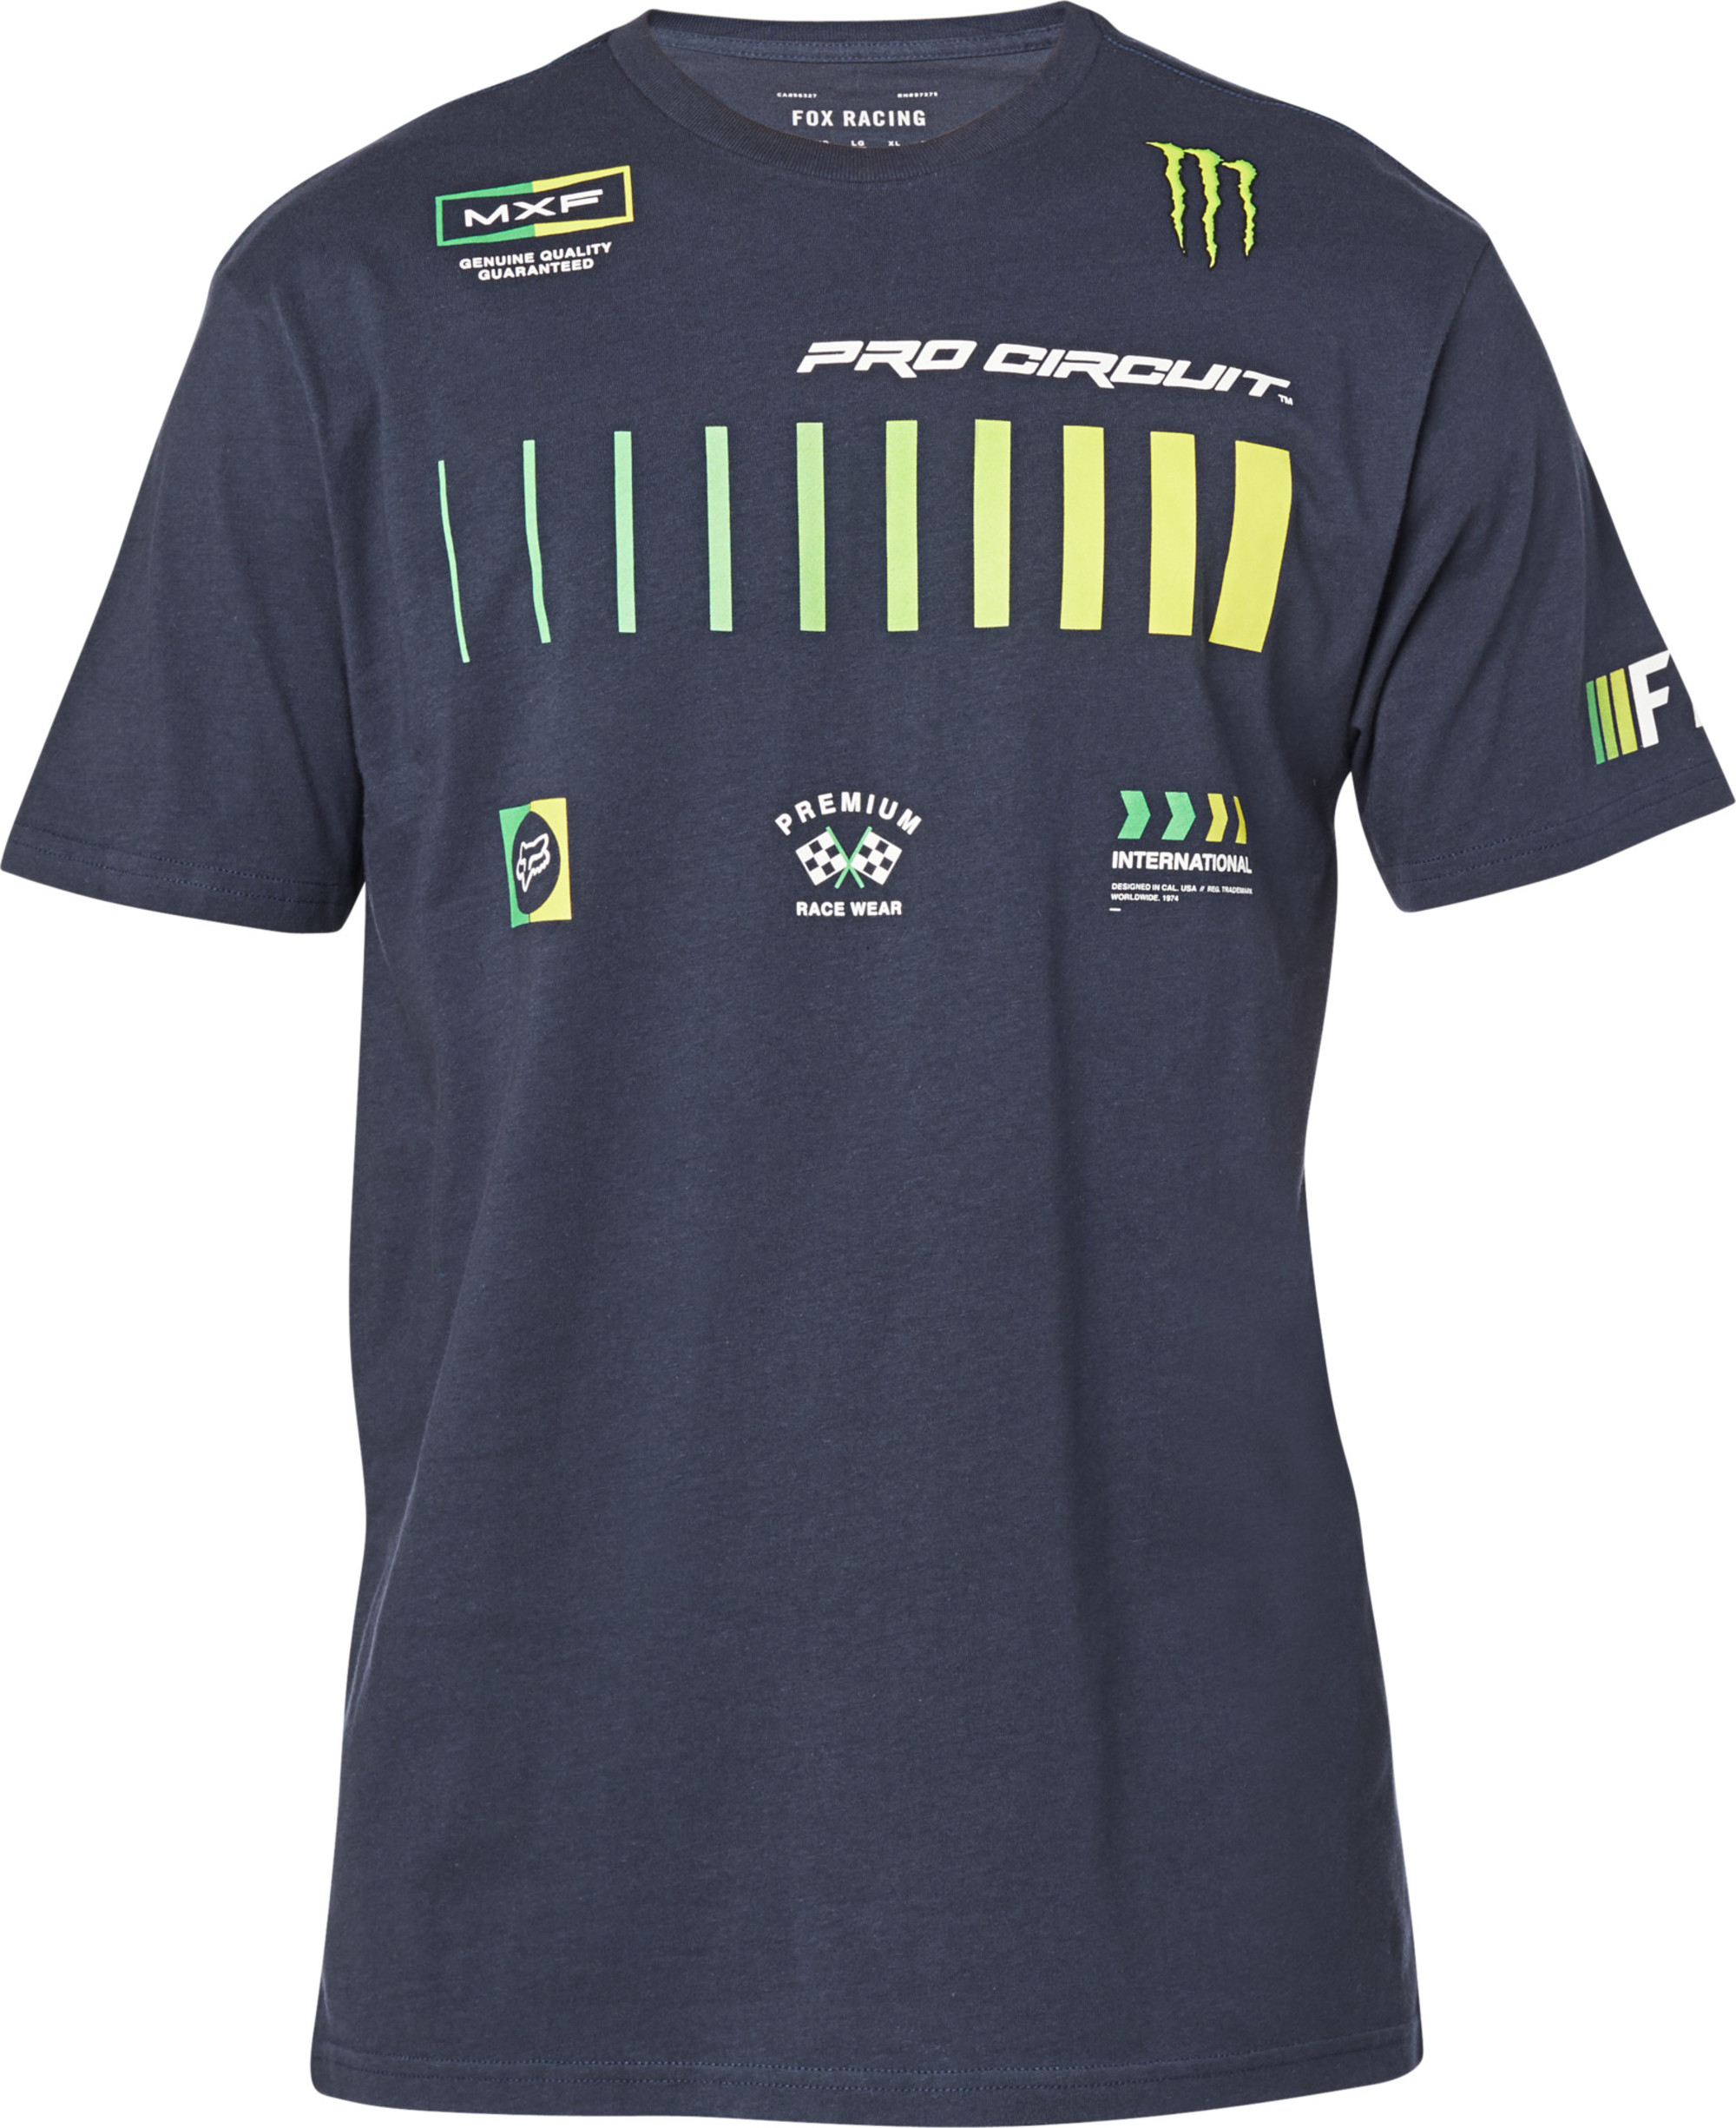 fox racing t-shirt shirts for men premium pro circuit